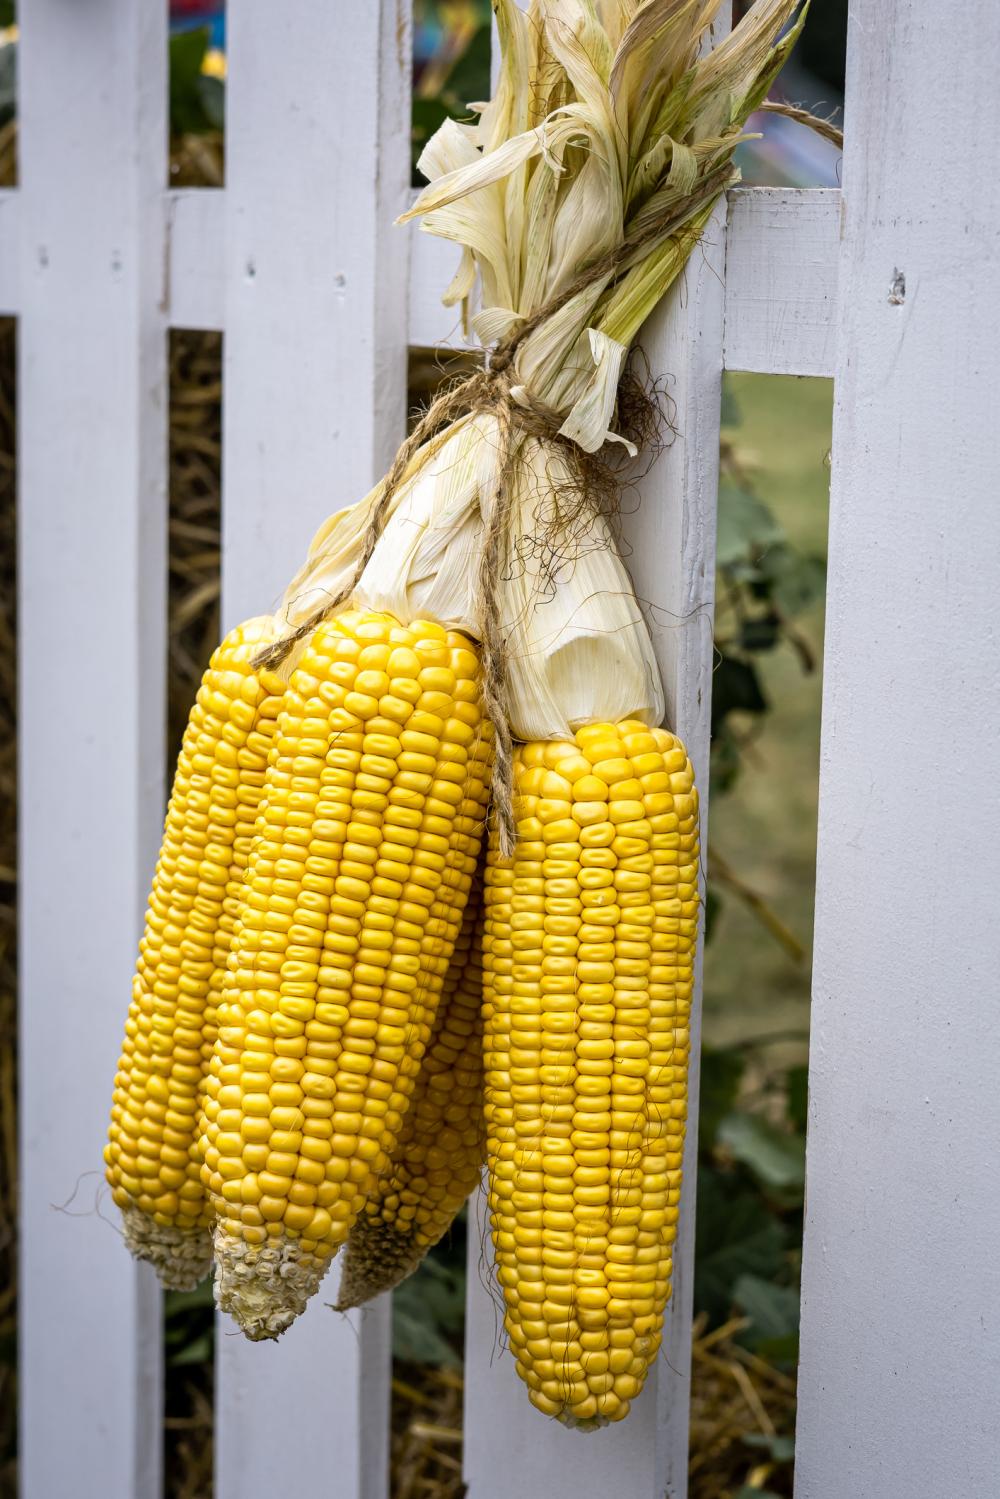 Corn husk decorations diy thanksgiving crafts